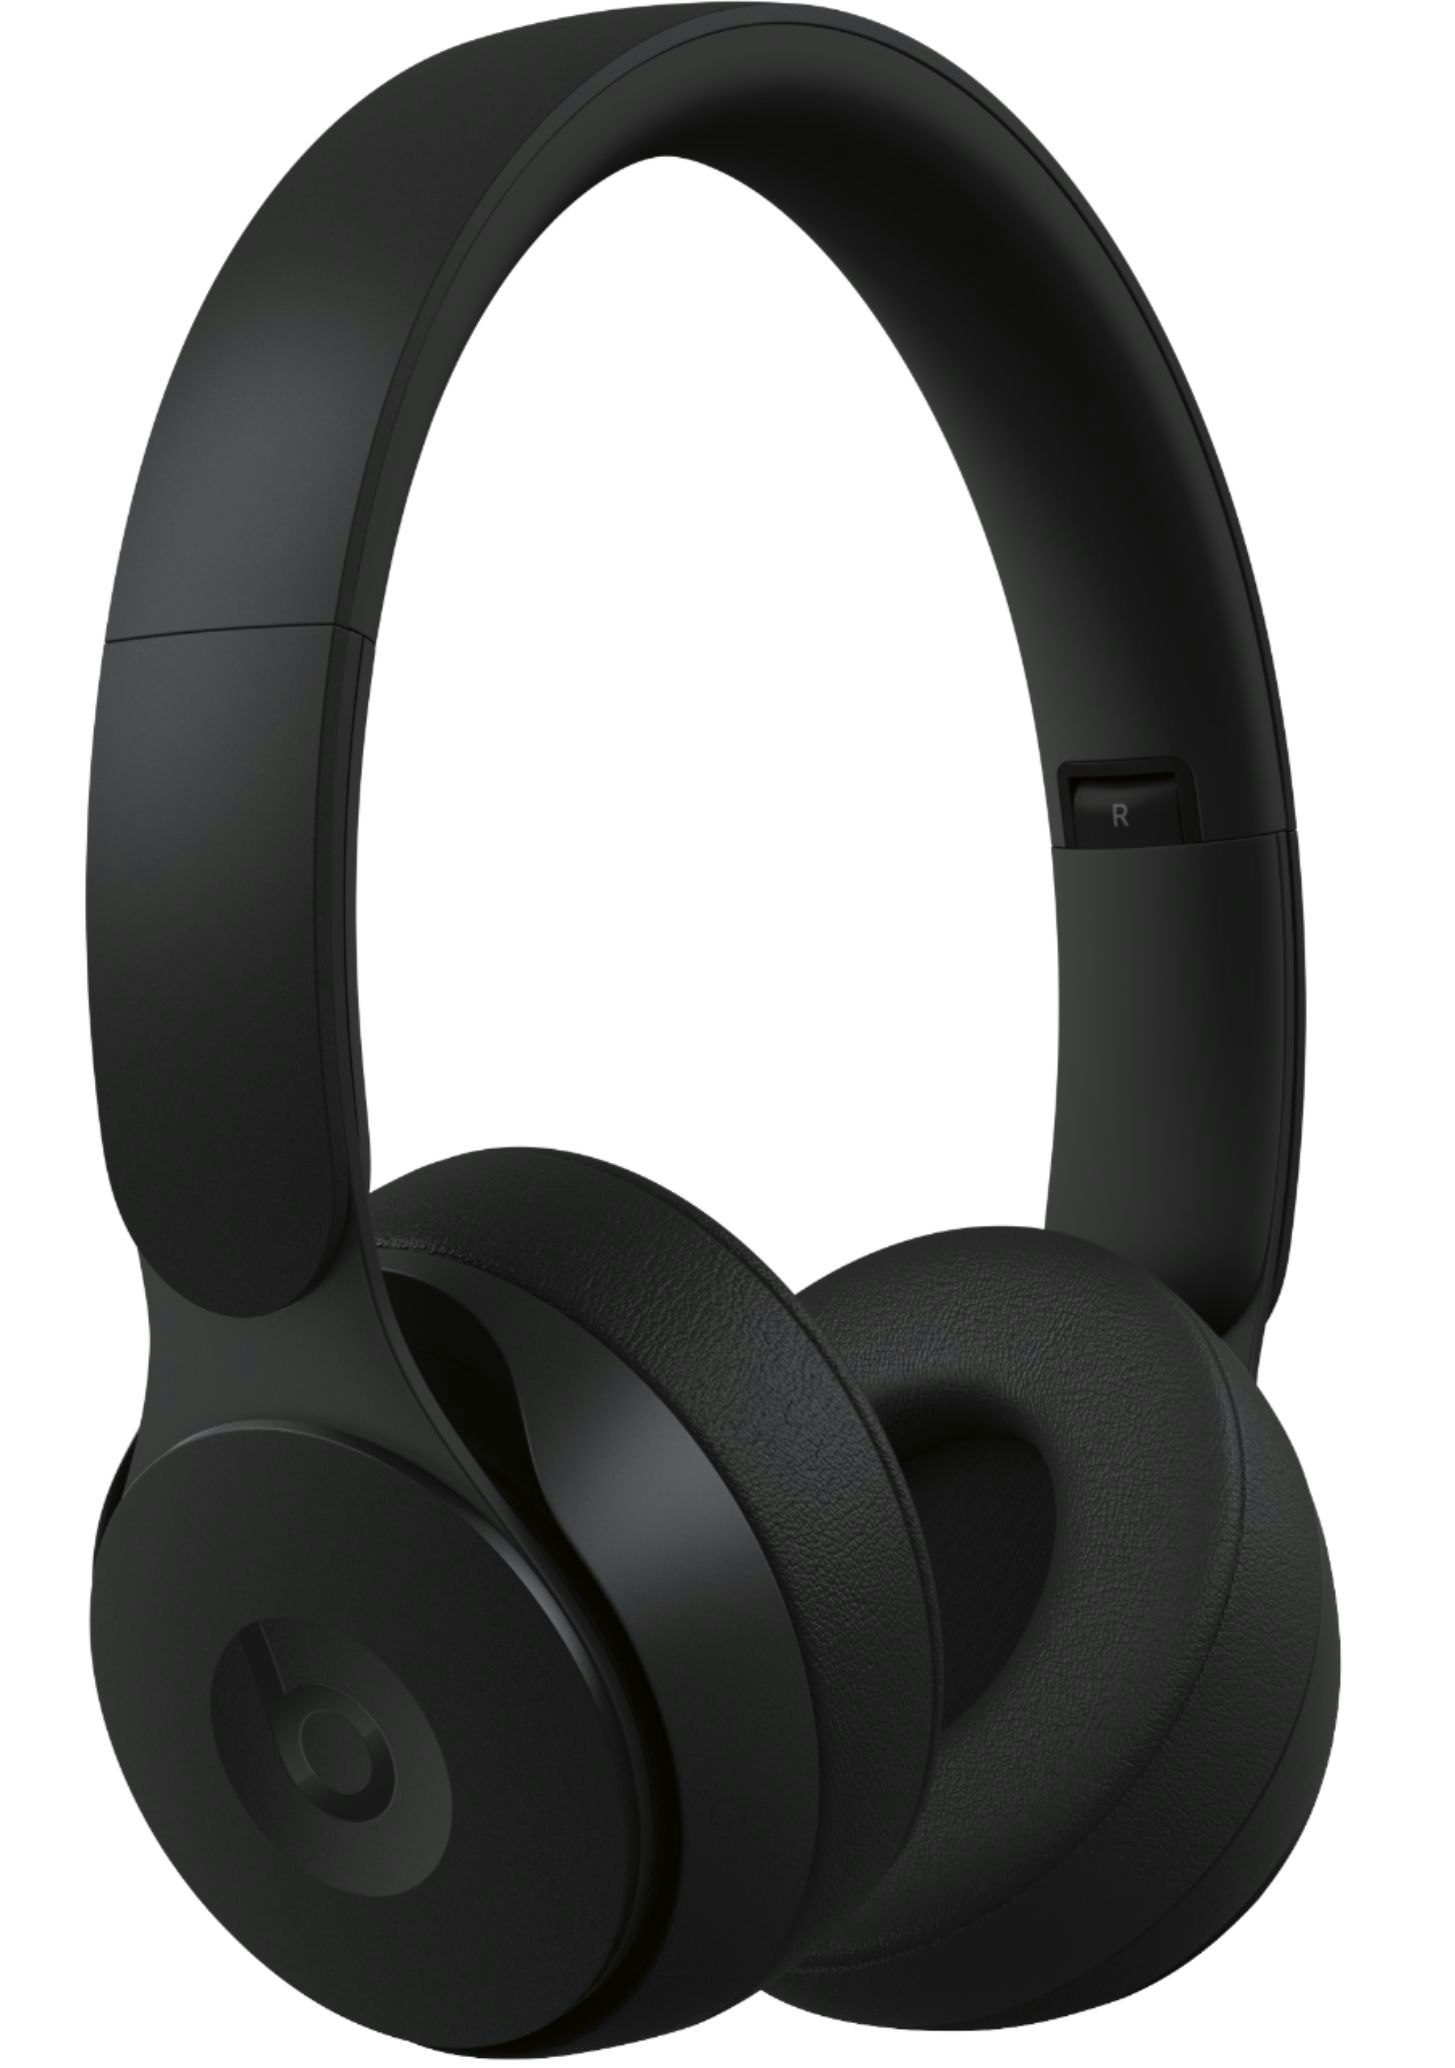 Beats by Dr. Dre Solo Pro Wireless Noise Cancelling Headphones MRJ62LL/A  Black -